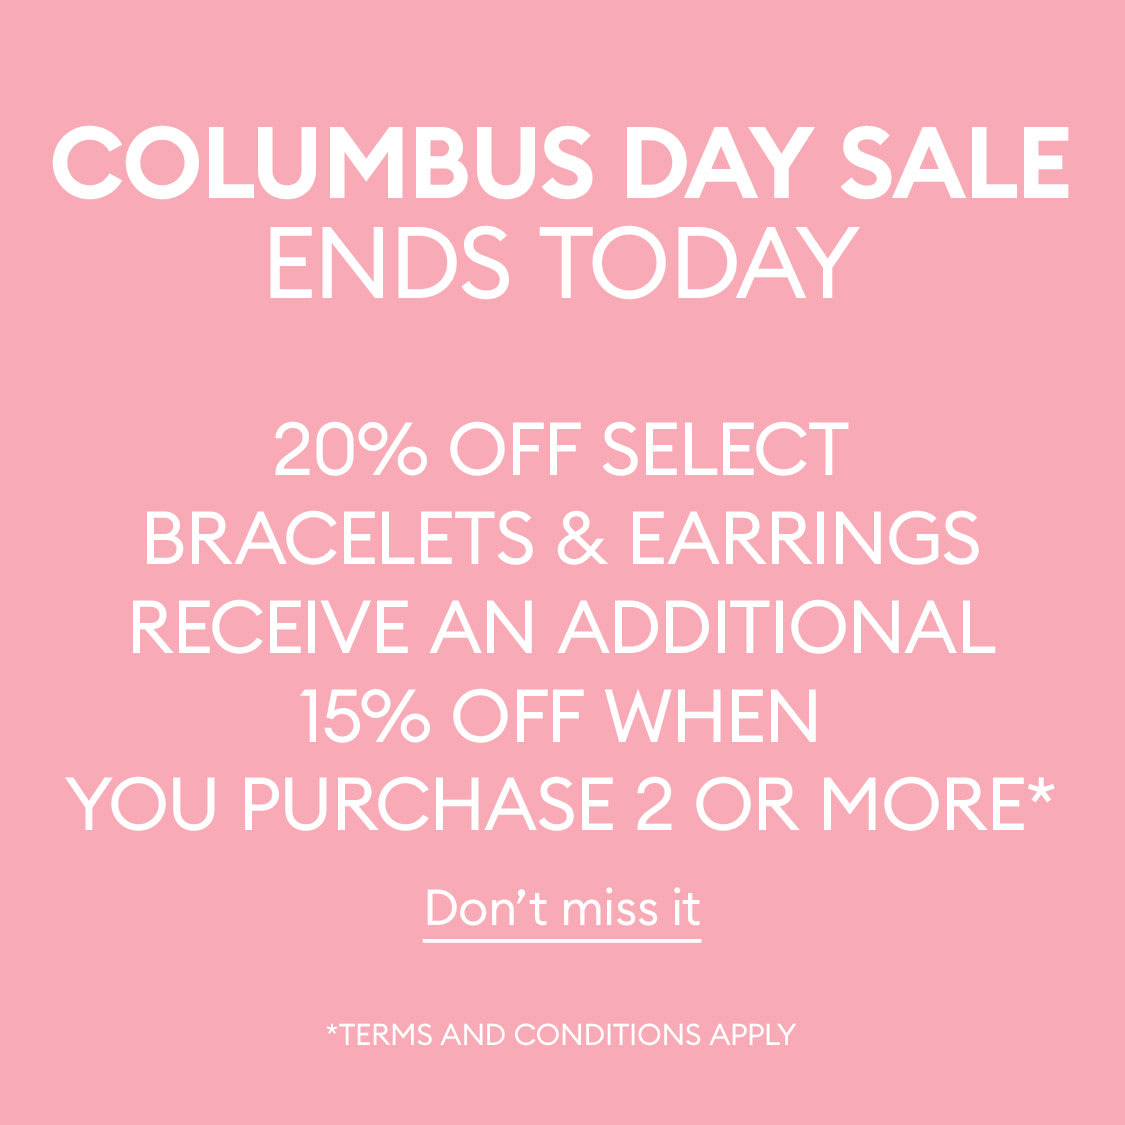 Swarovski Columbus Day Sale ends today